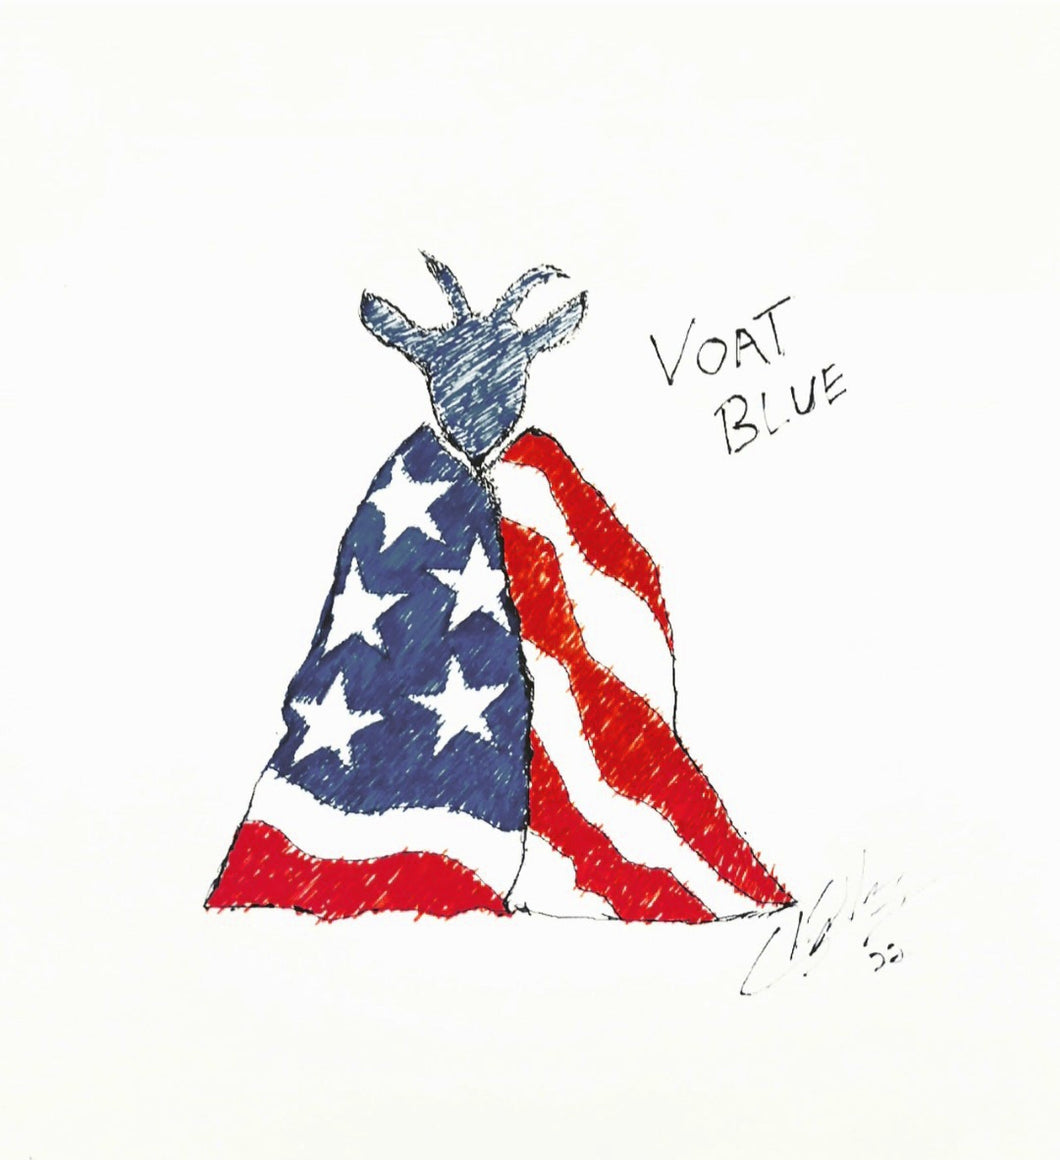 Voat Blue - Hand-embellished, ink on canvas. Limited edition